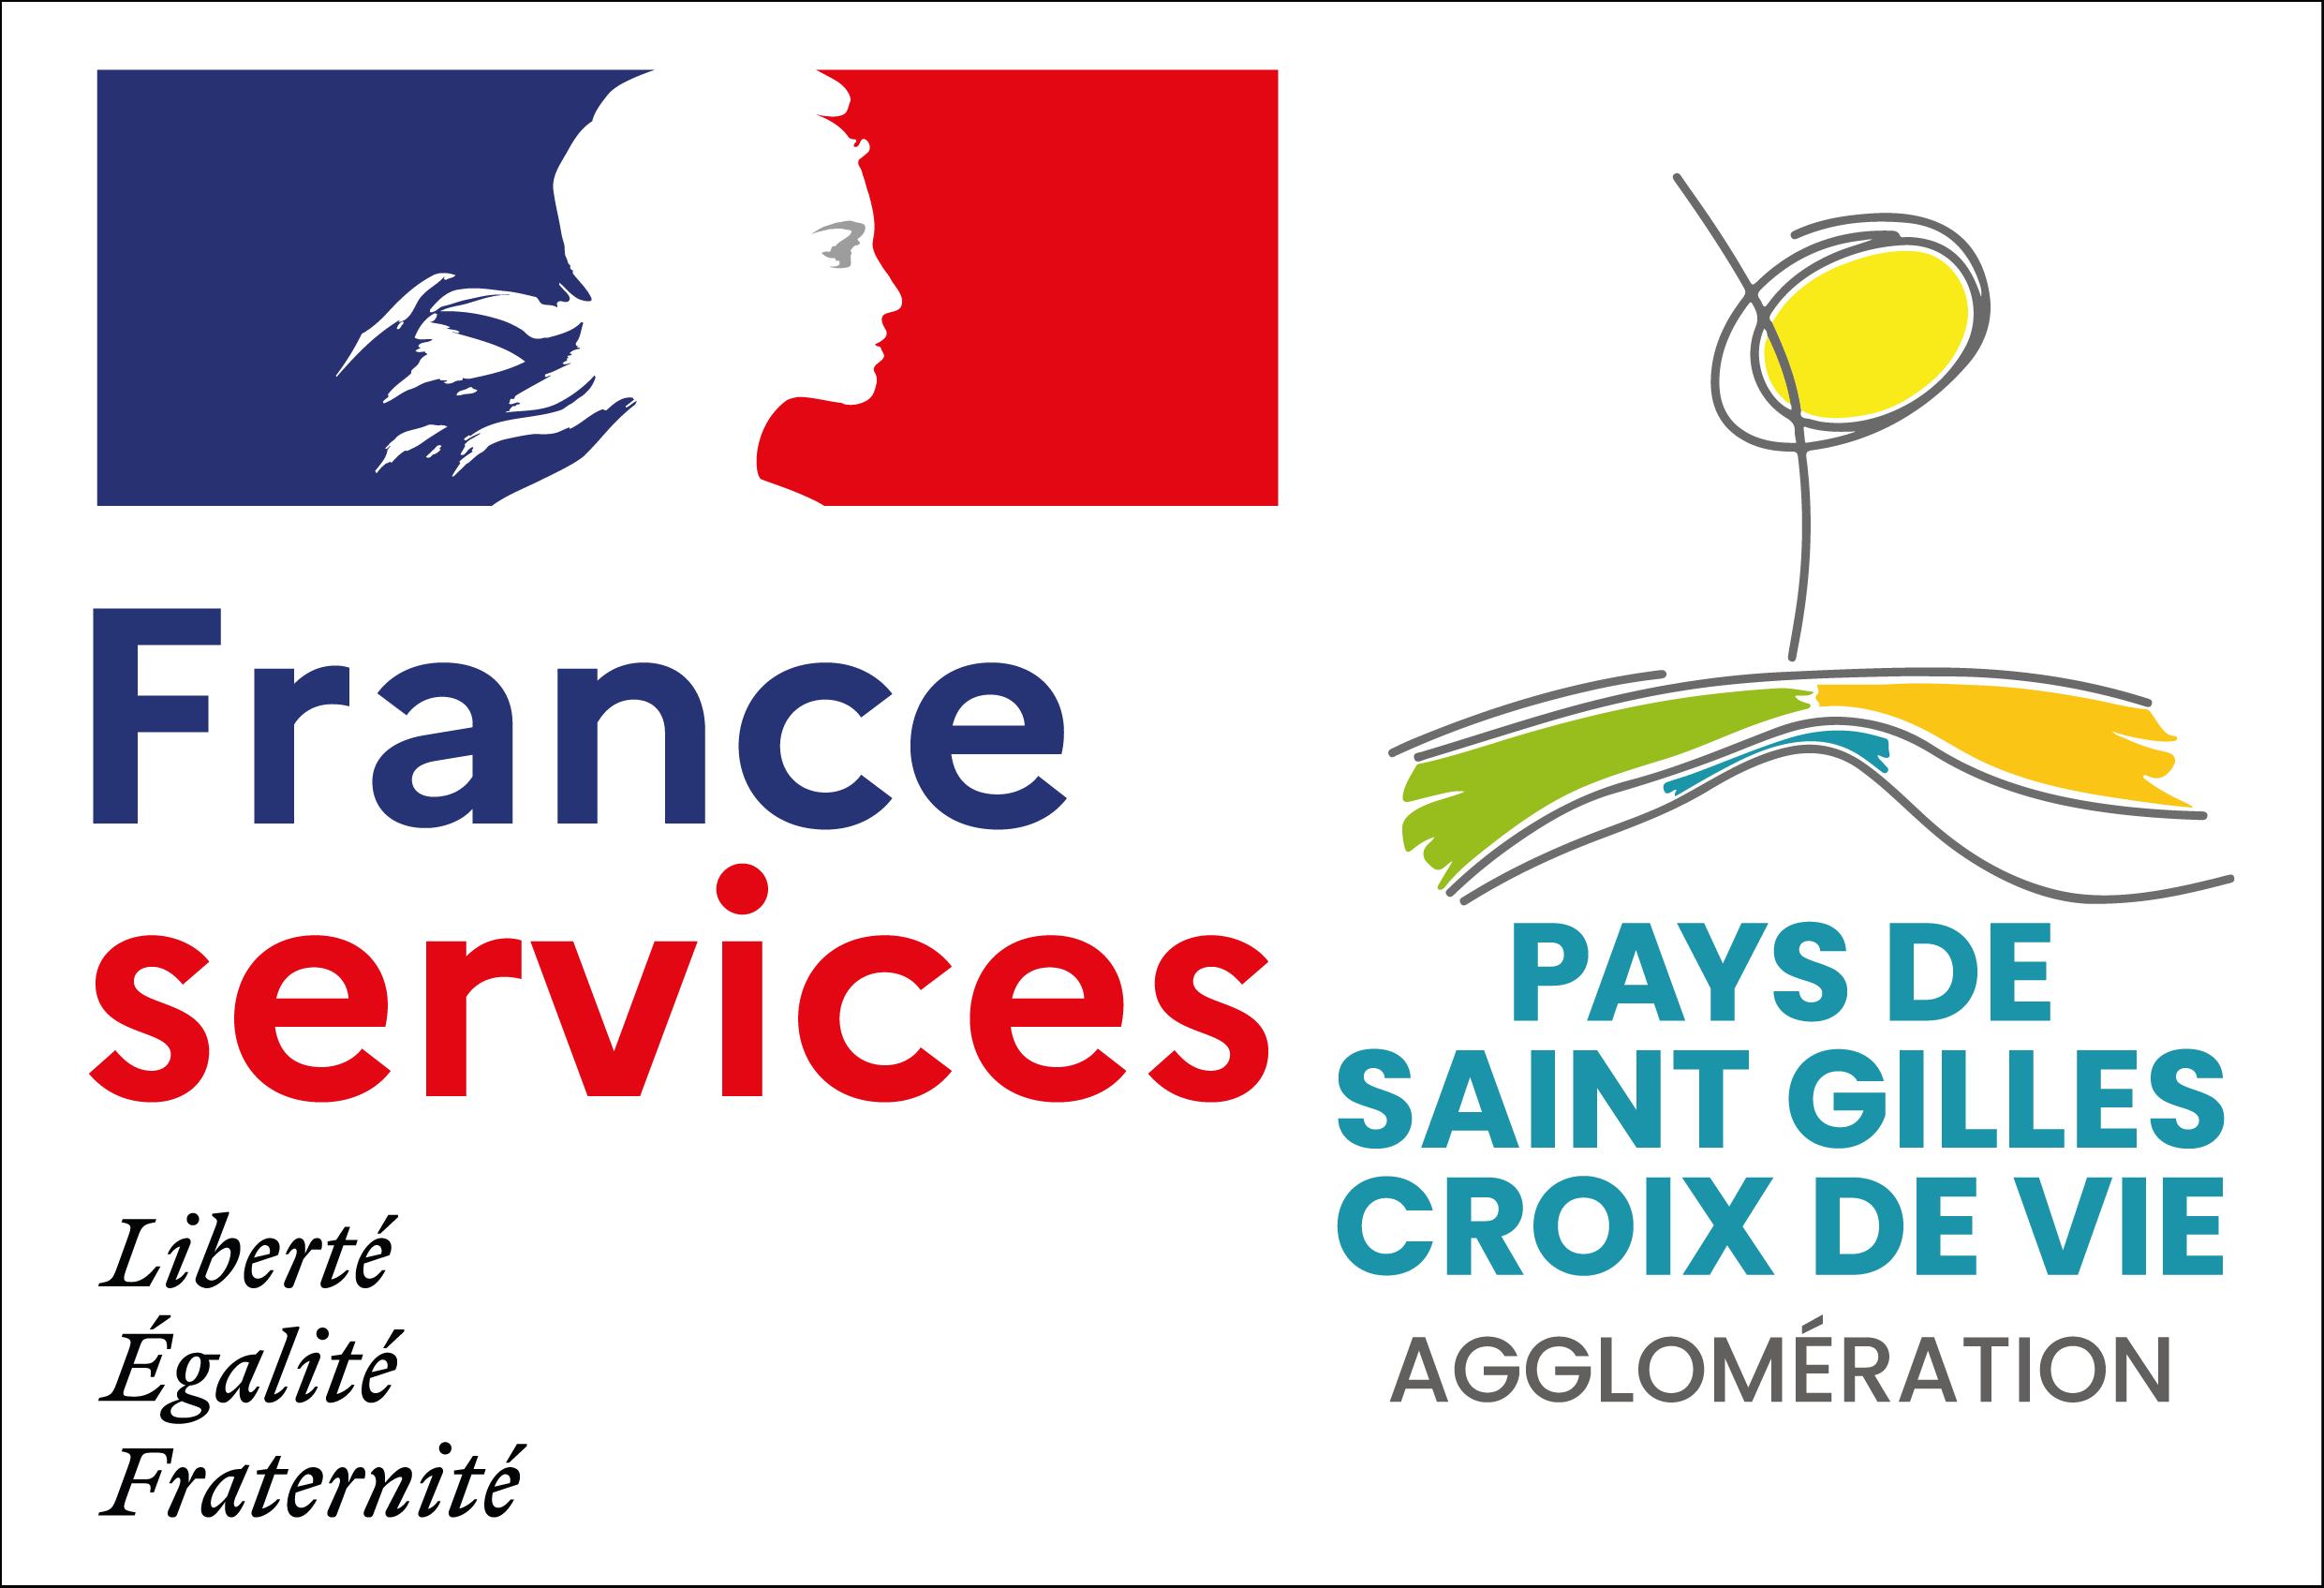 FranceService-Agglo